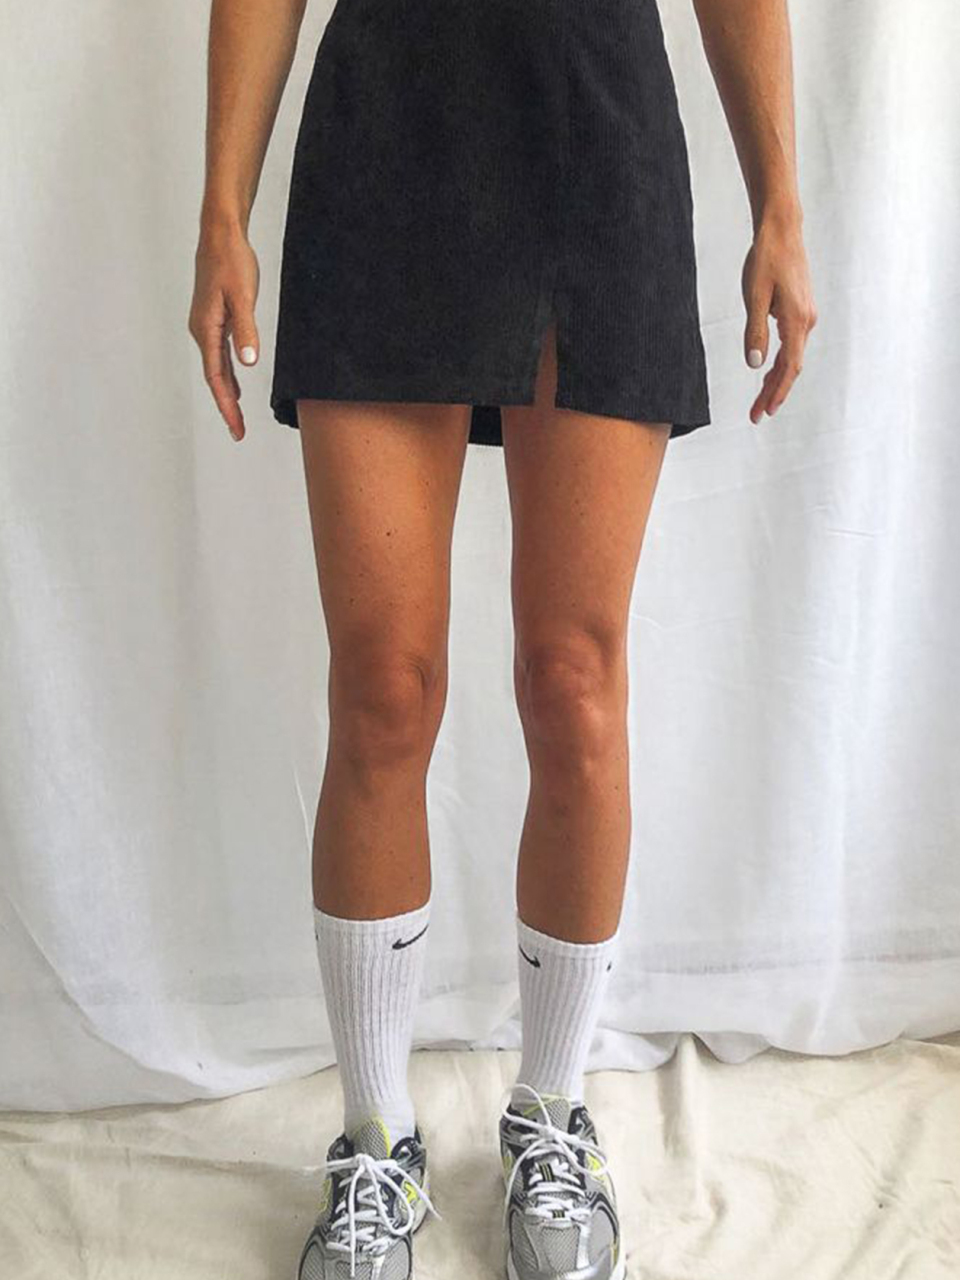 High Waist Corduroy Skirt Solid Split A-Line Skirt